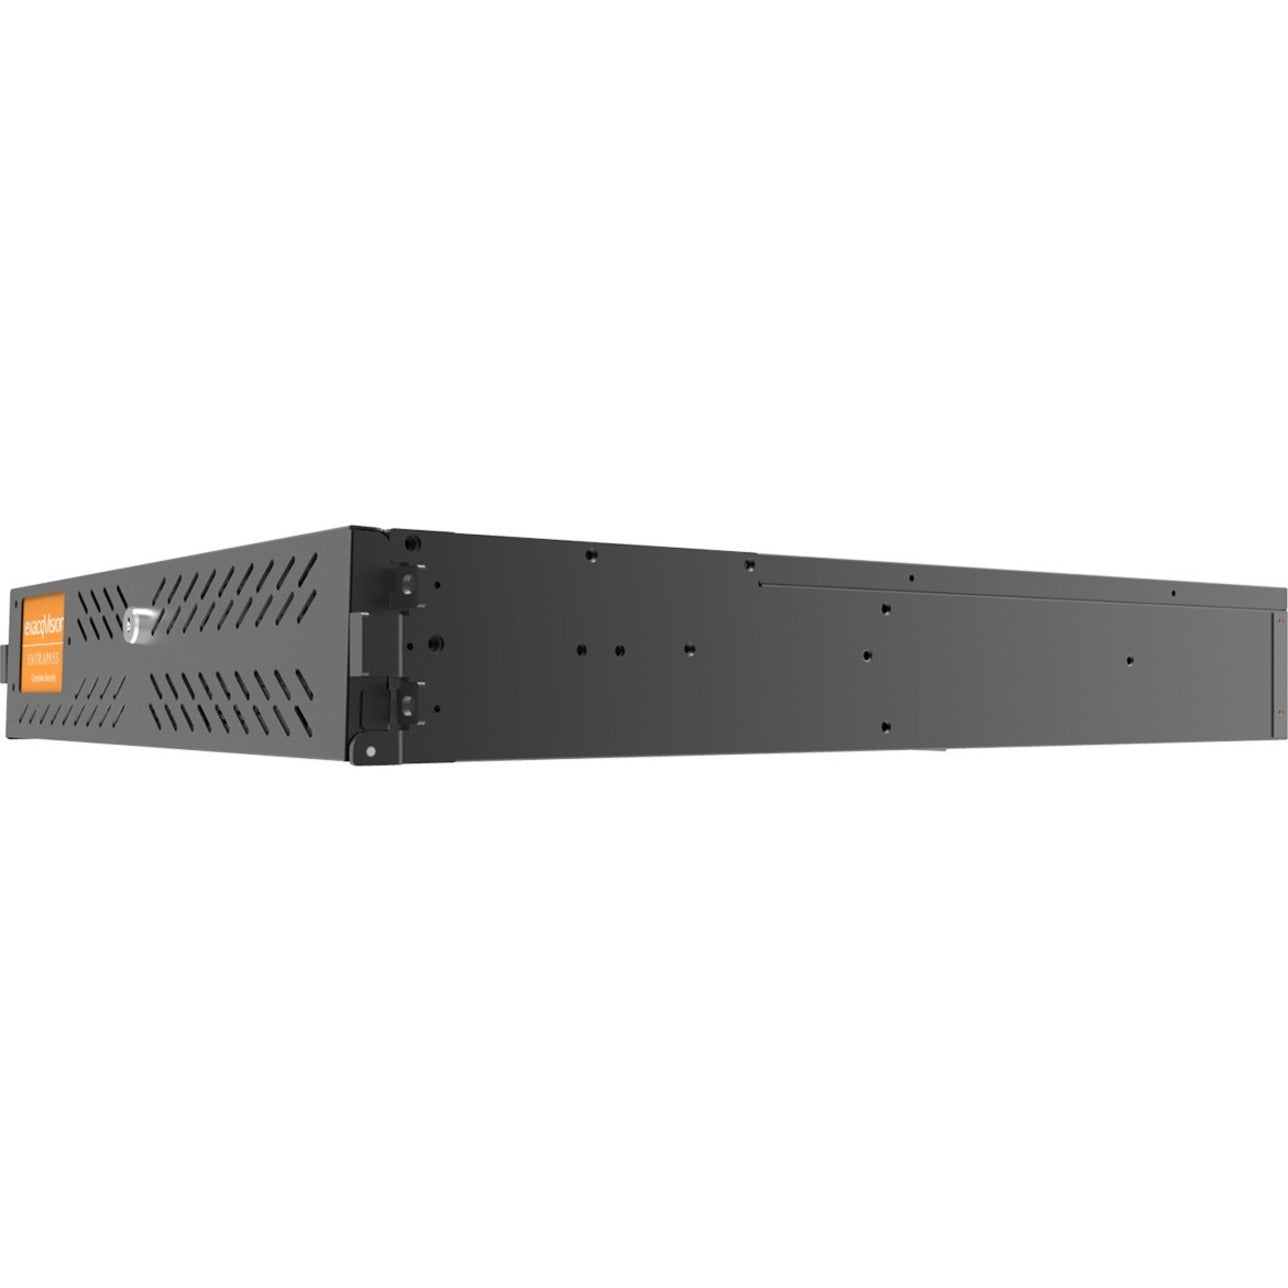 Exacq exacqVision Z Network Surveillance Server - 8 TB HDD